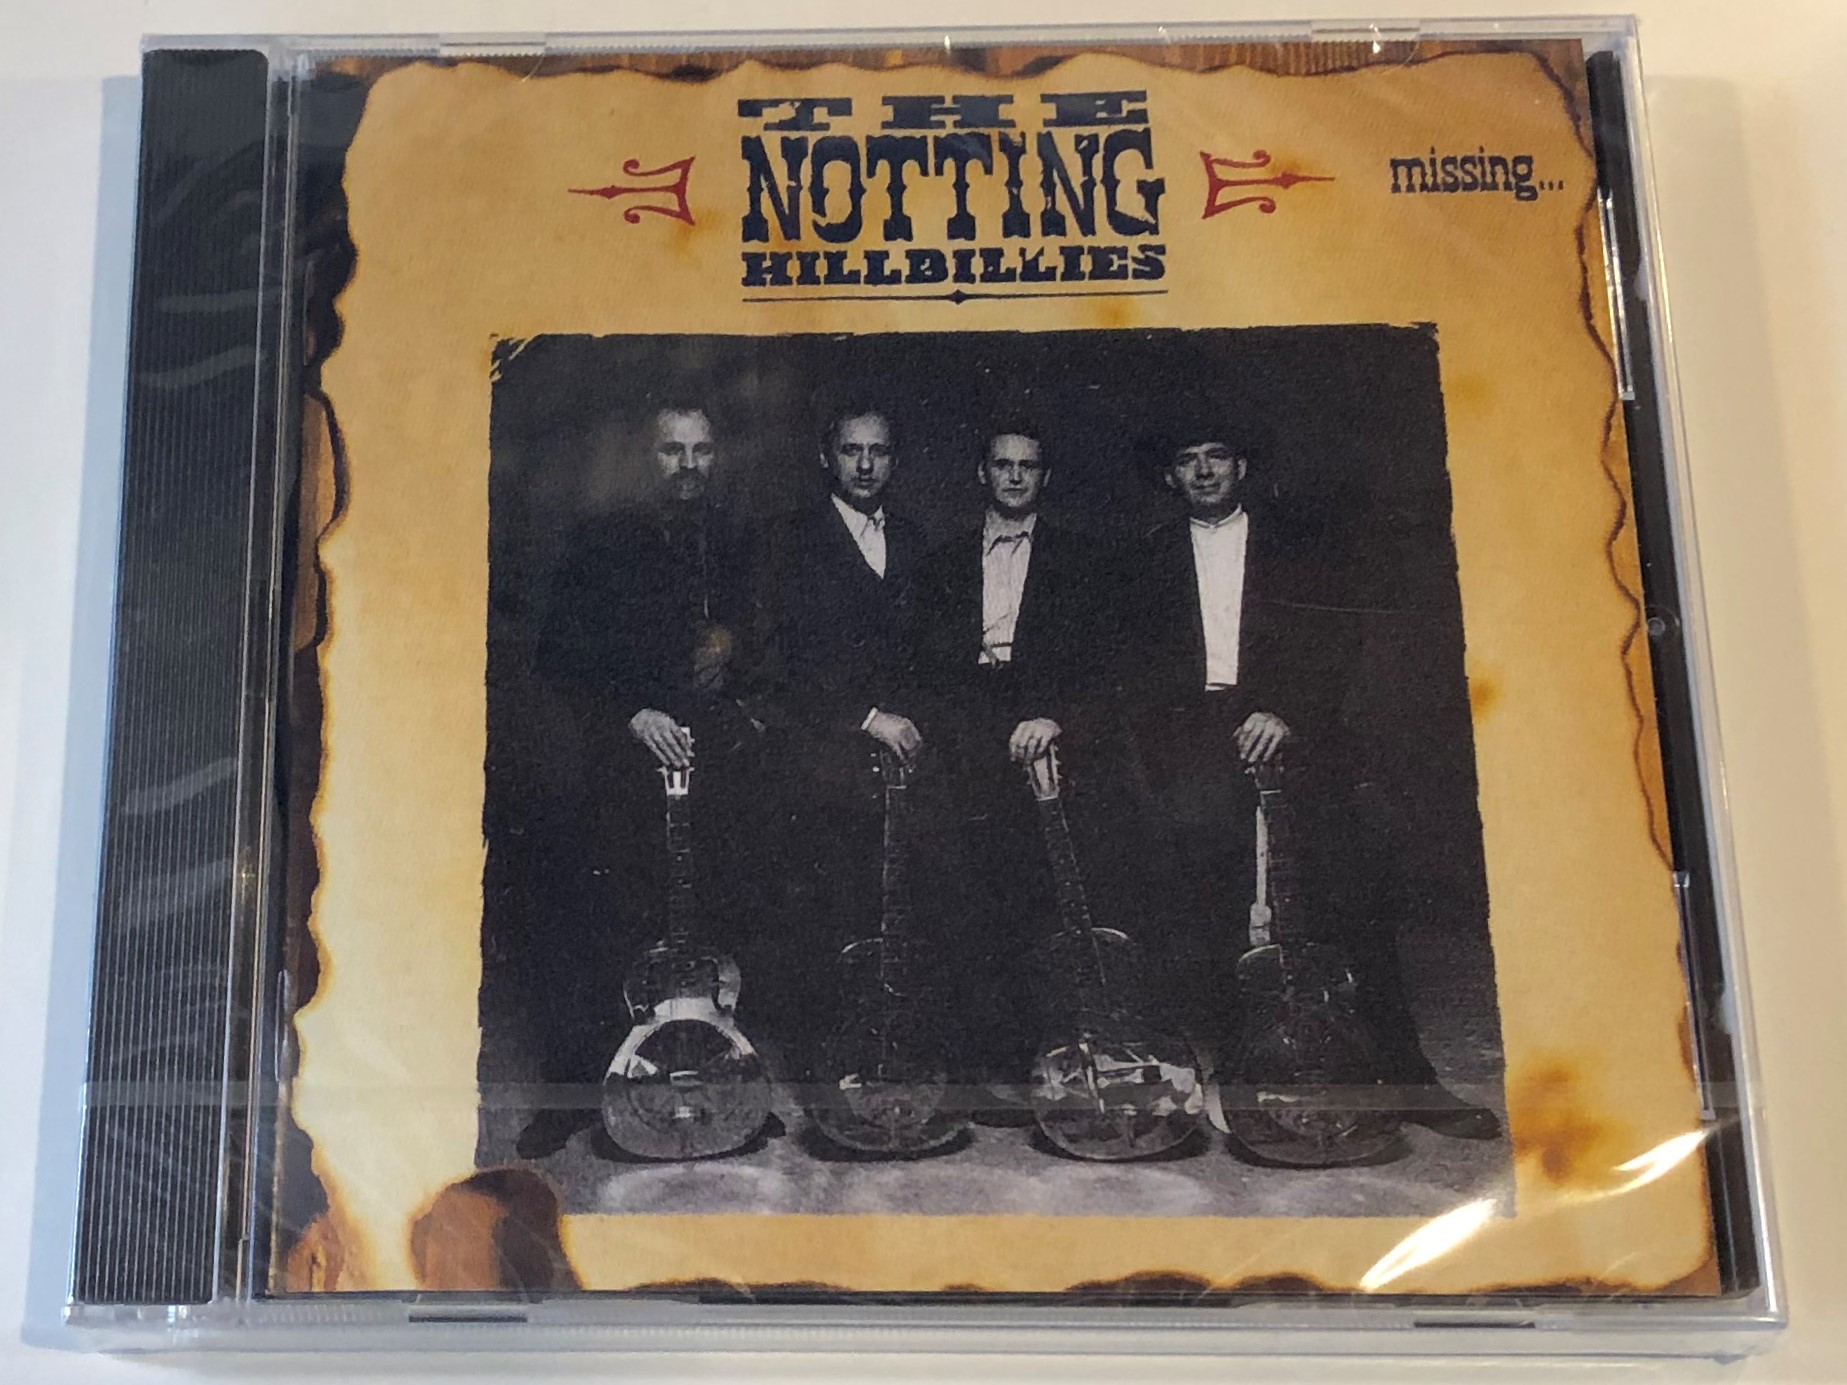 the-notting-hillbillies-missing...-phonogram-audio-cd-1990-842-671-2-1-.jpg